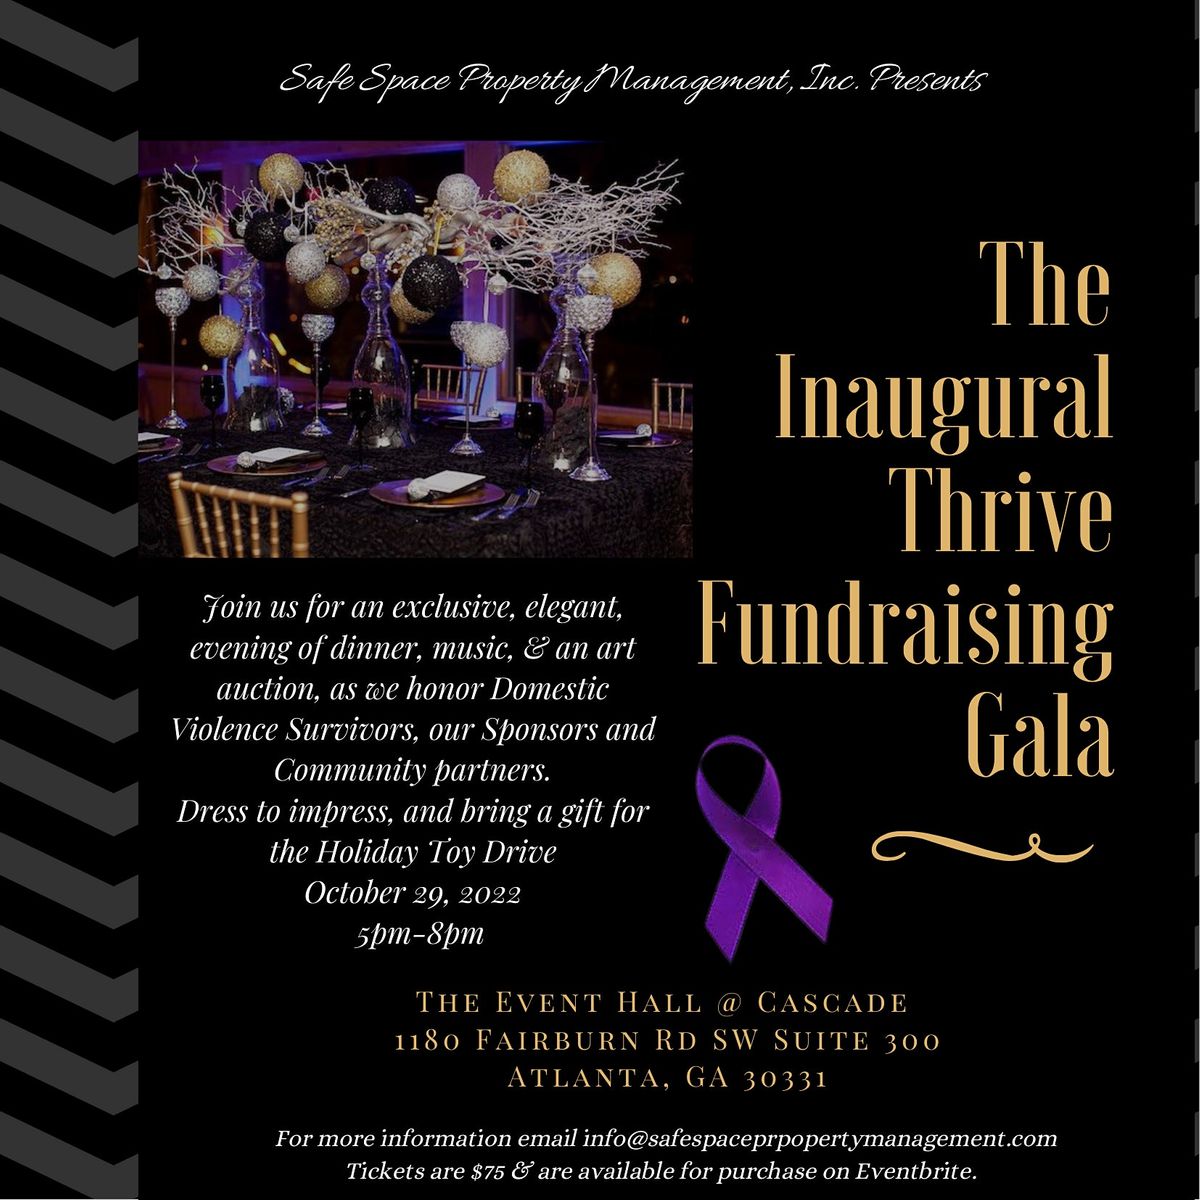 The Inaugural Thrive Fundraising Gala